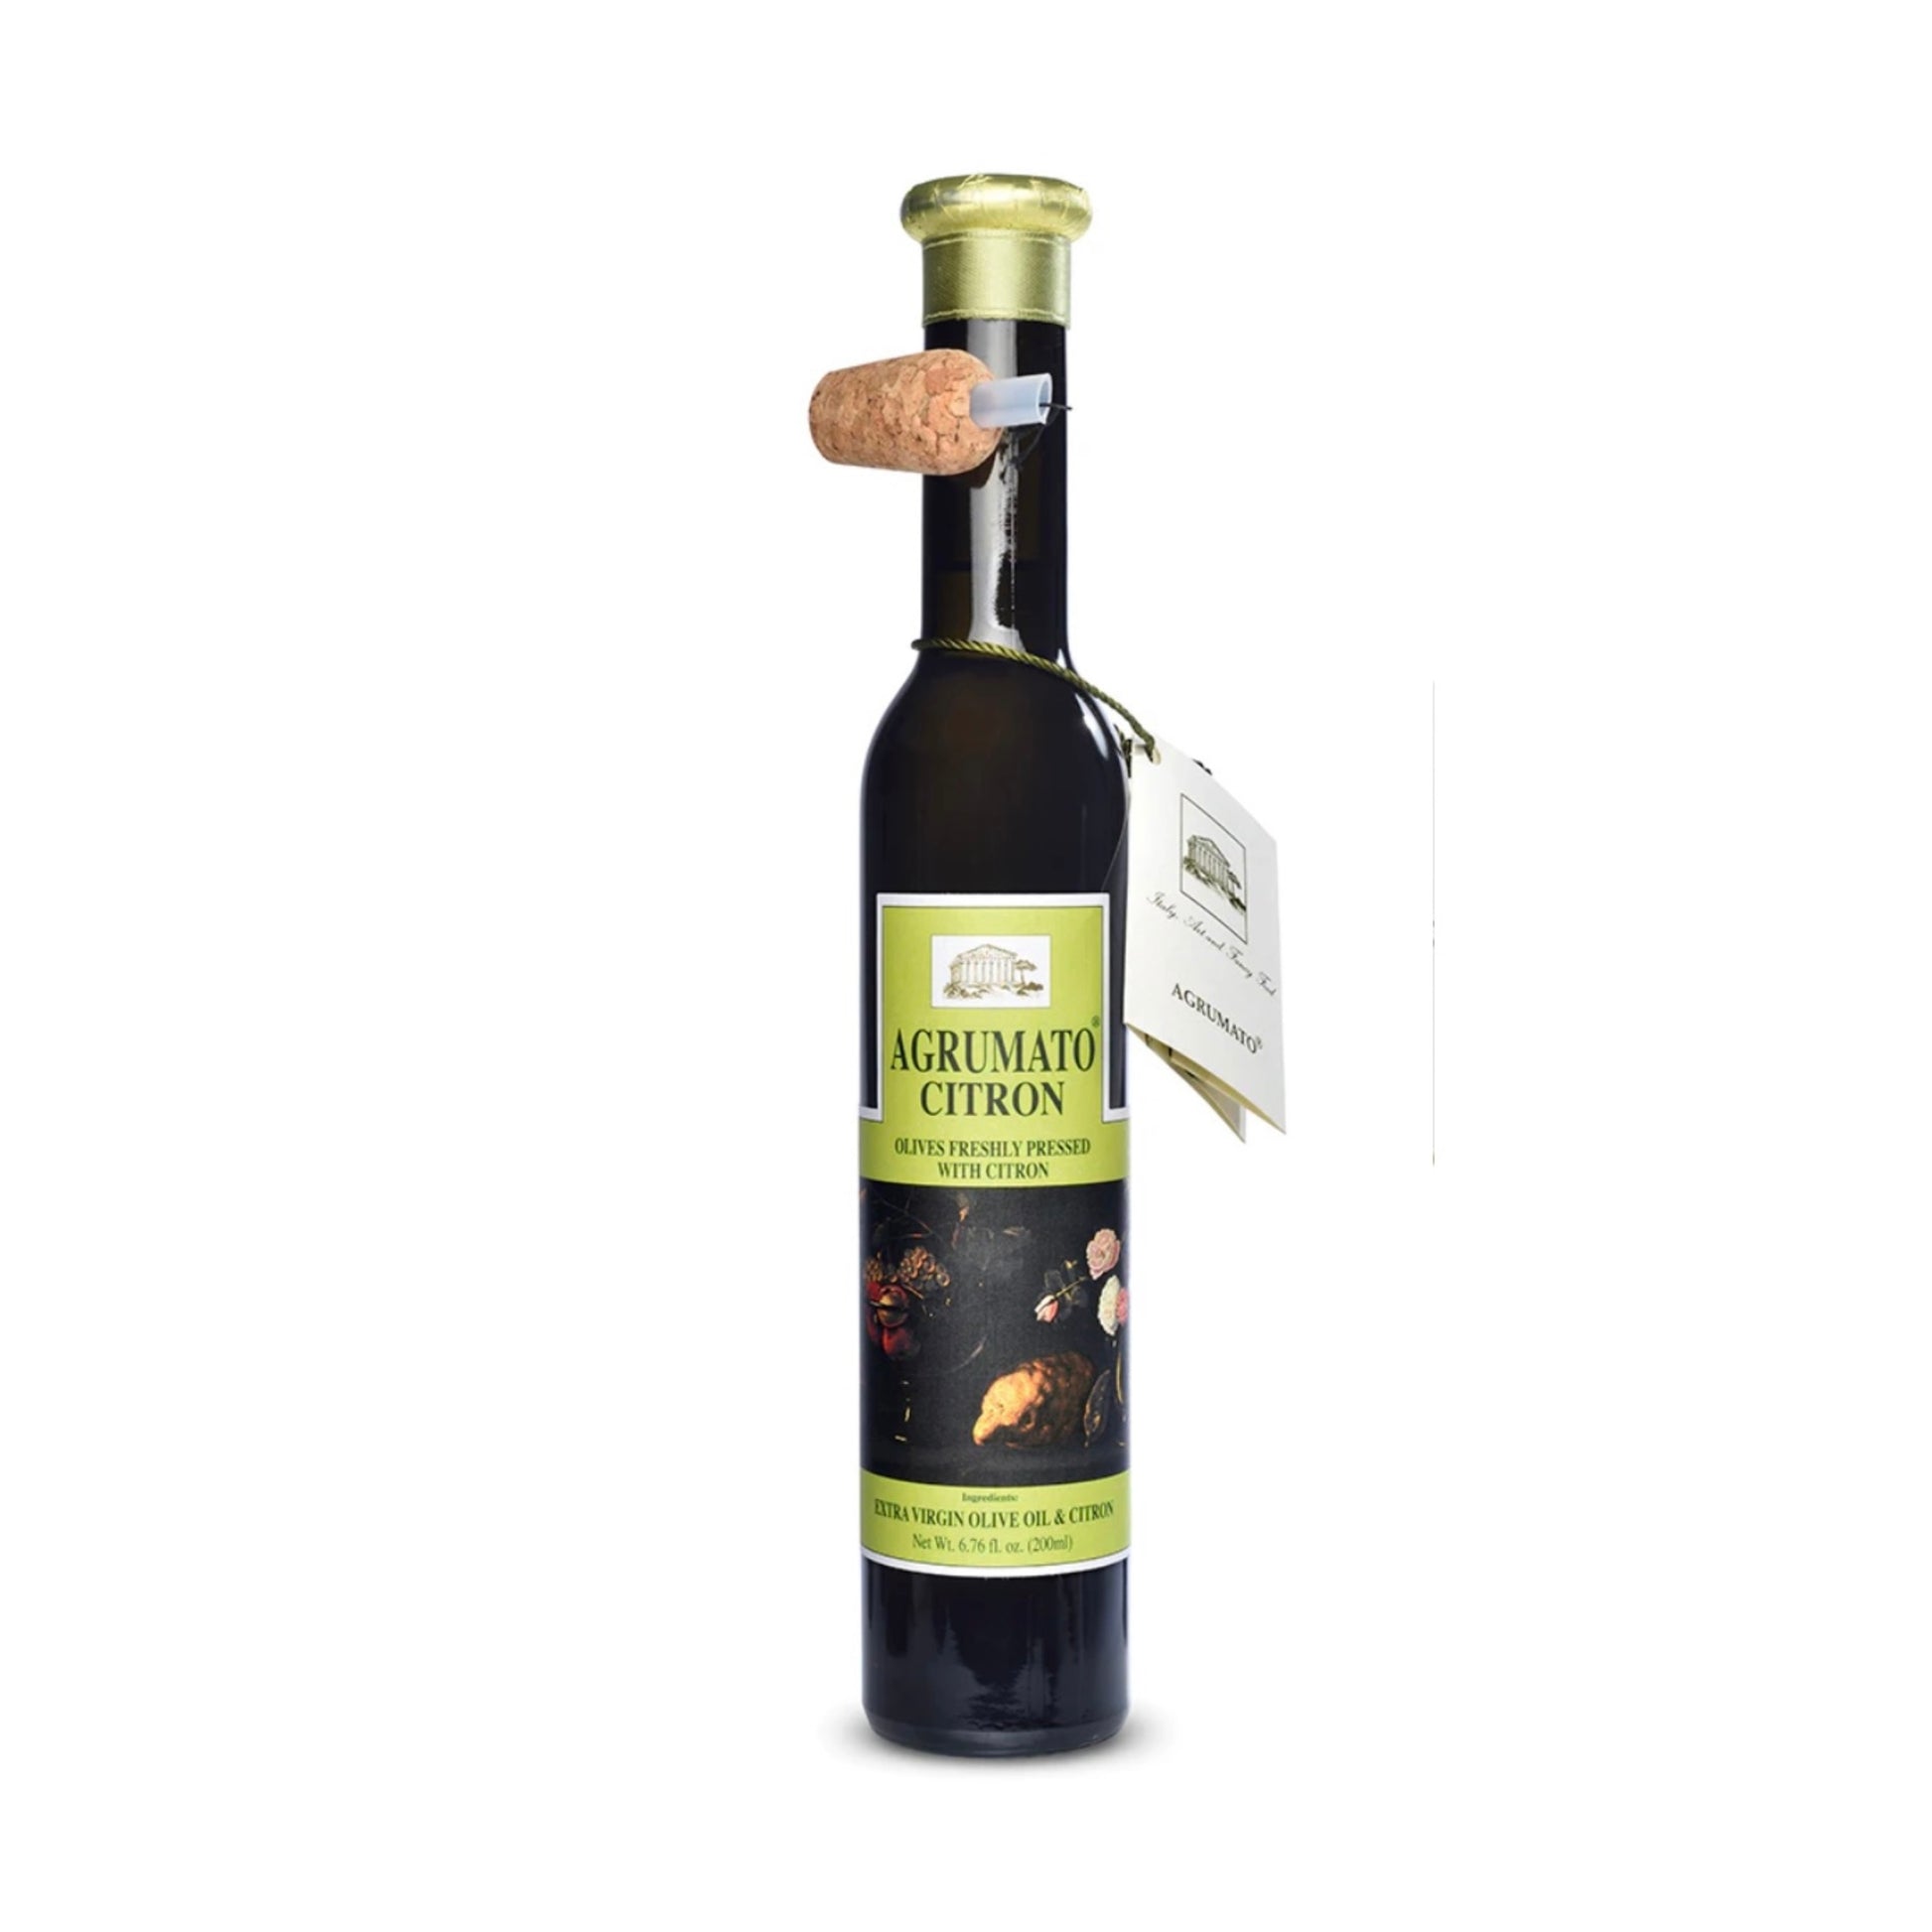 Agrumato Citron Extra Virgin Olive Oil AGR-005